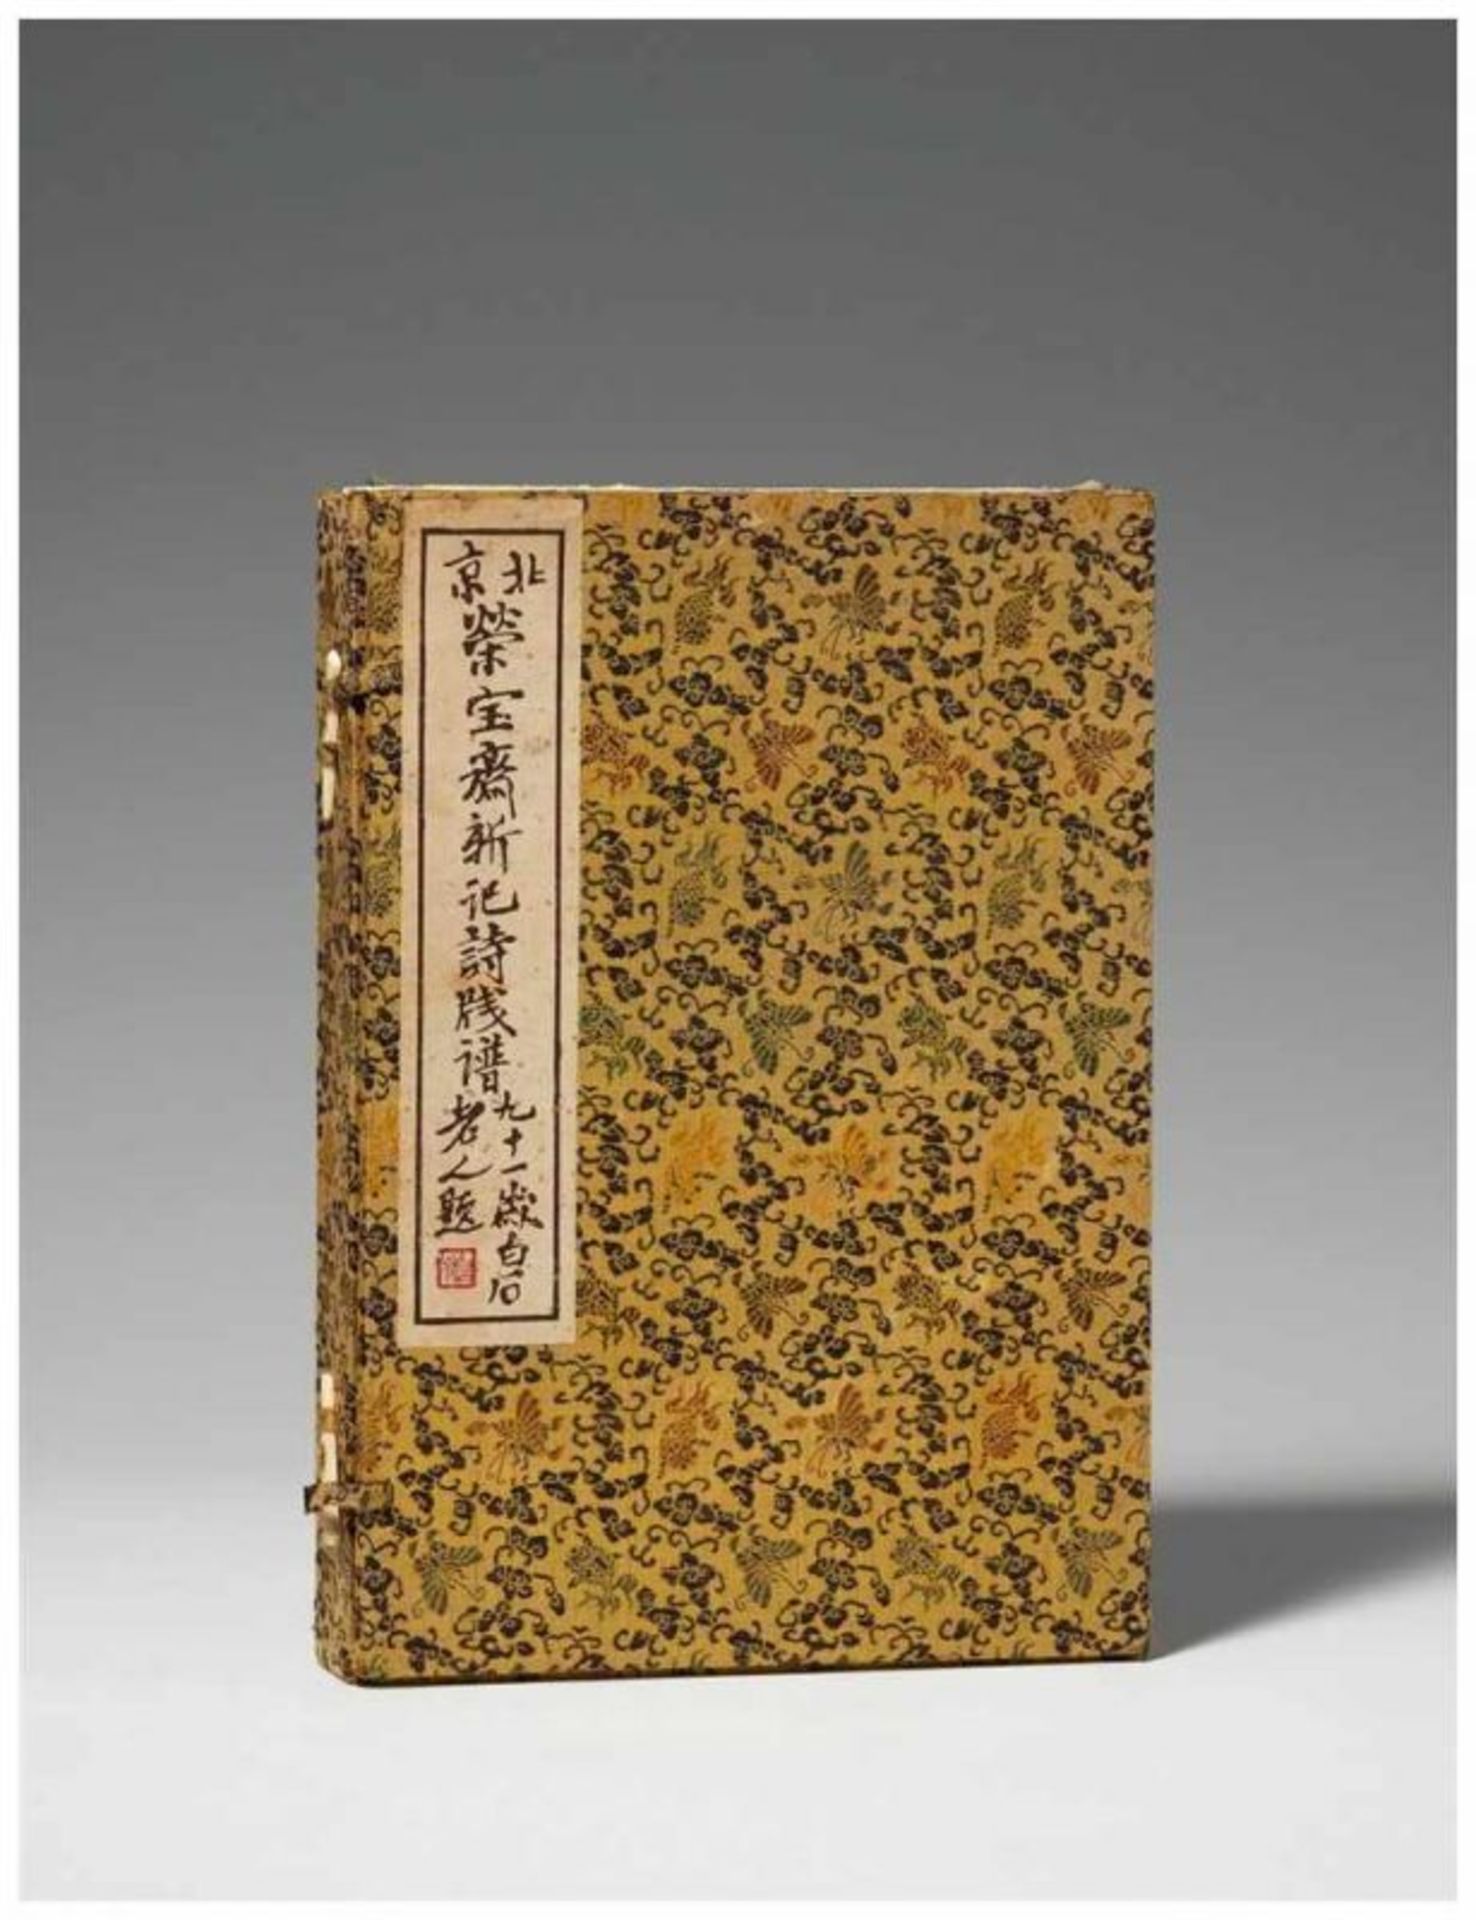 Qi Baishi Zwei Bände mit dem Titel "Beijing Rongbaozhai xiin jishi jianpu" mit 120 Farbholzschnitten - Image 2 of 2